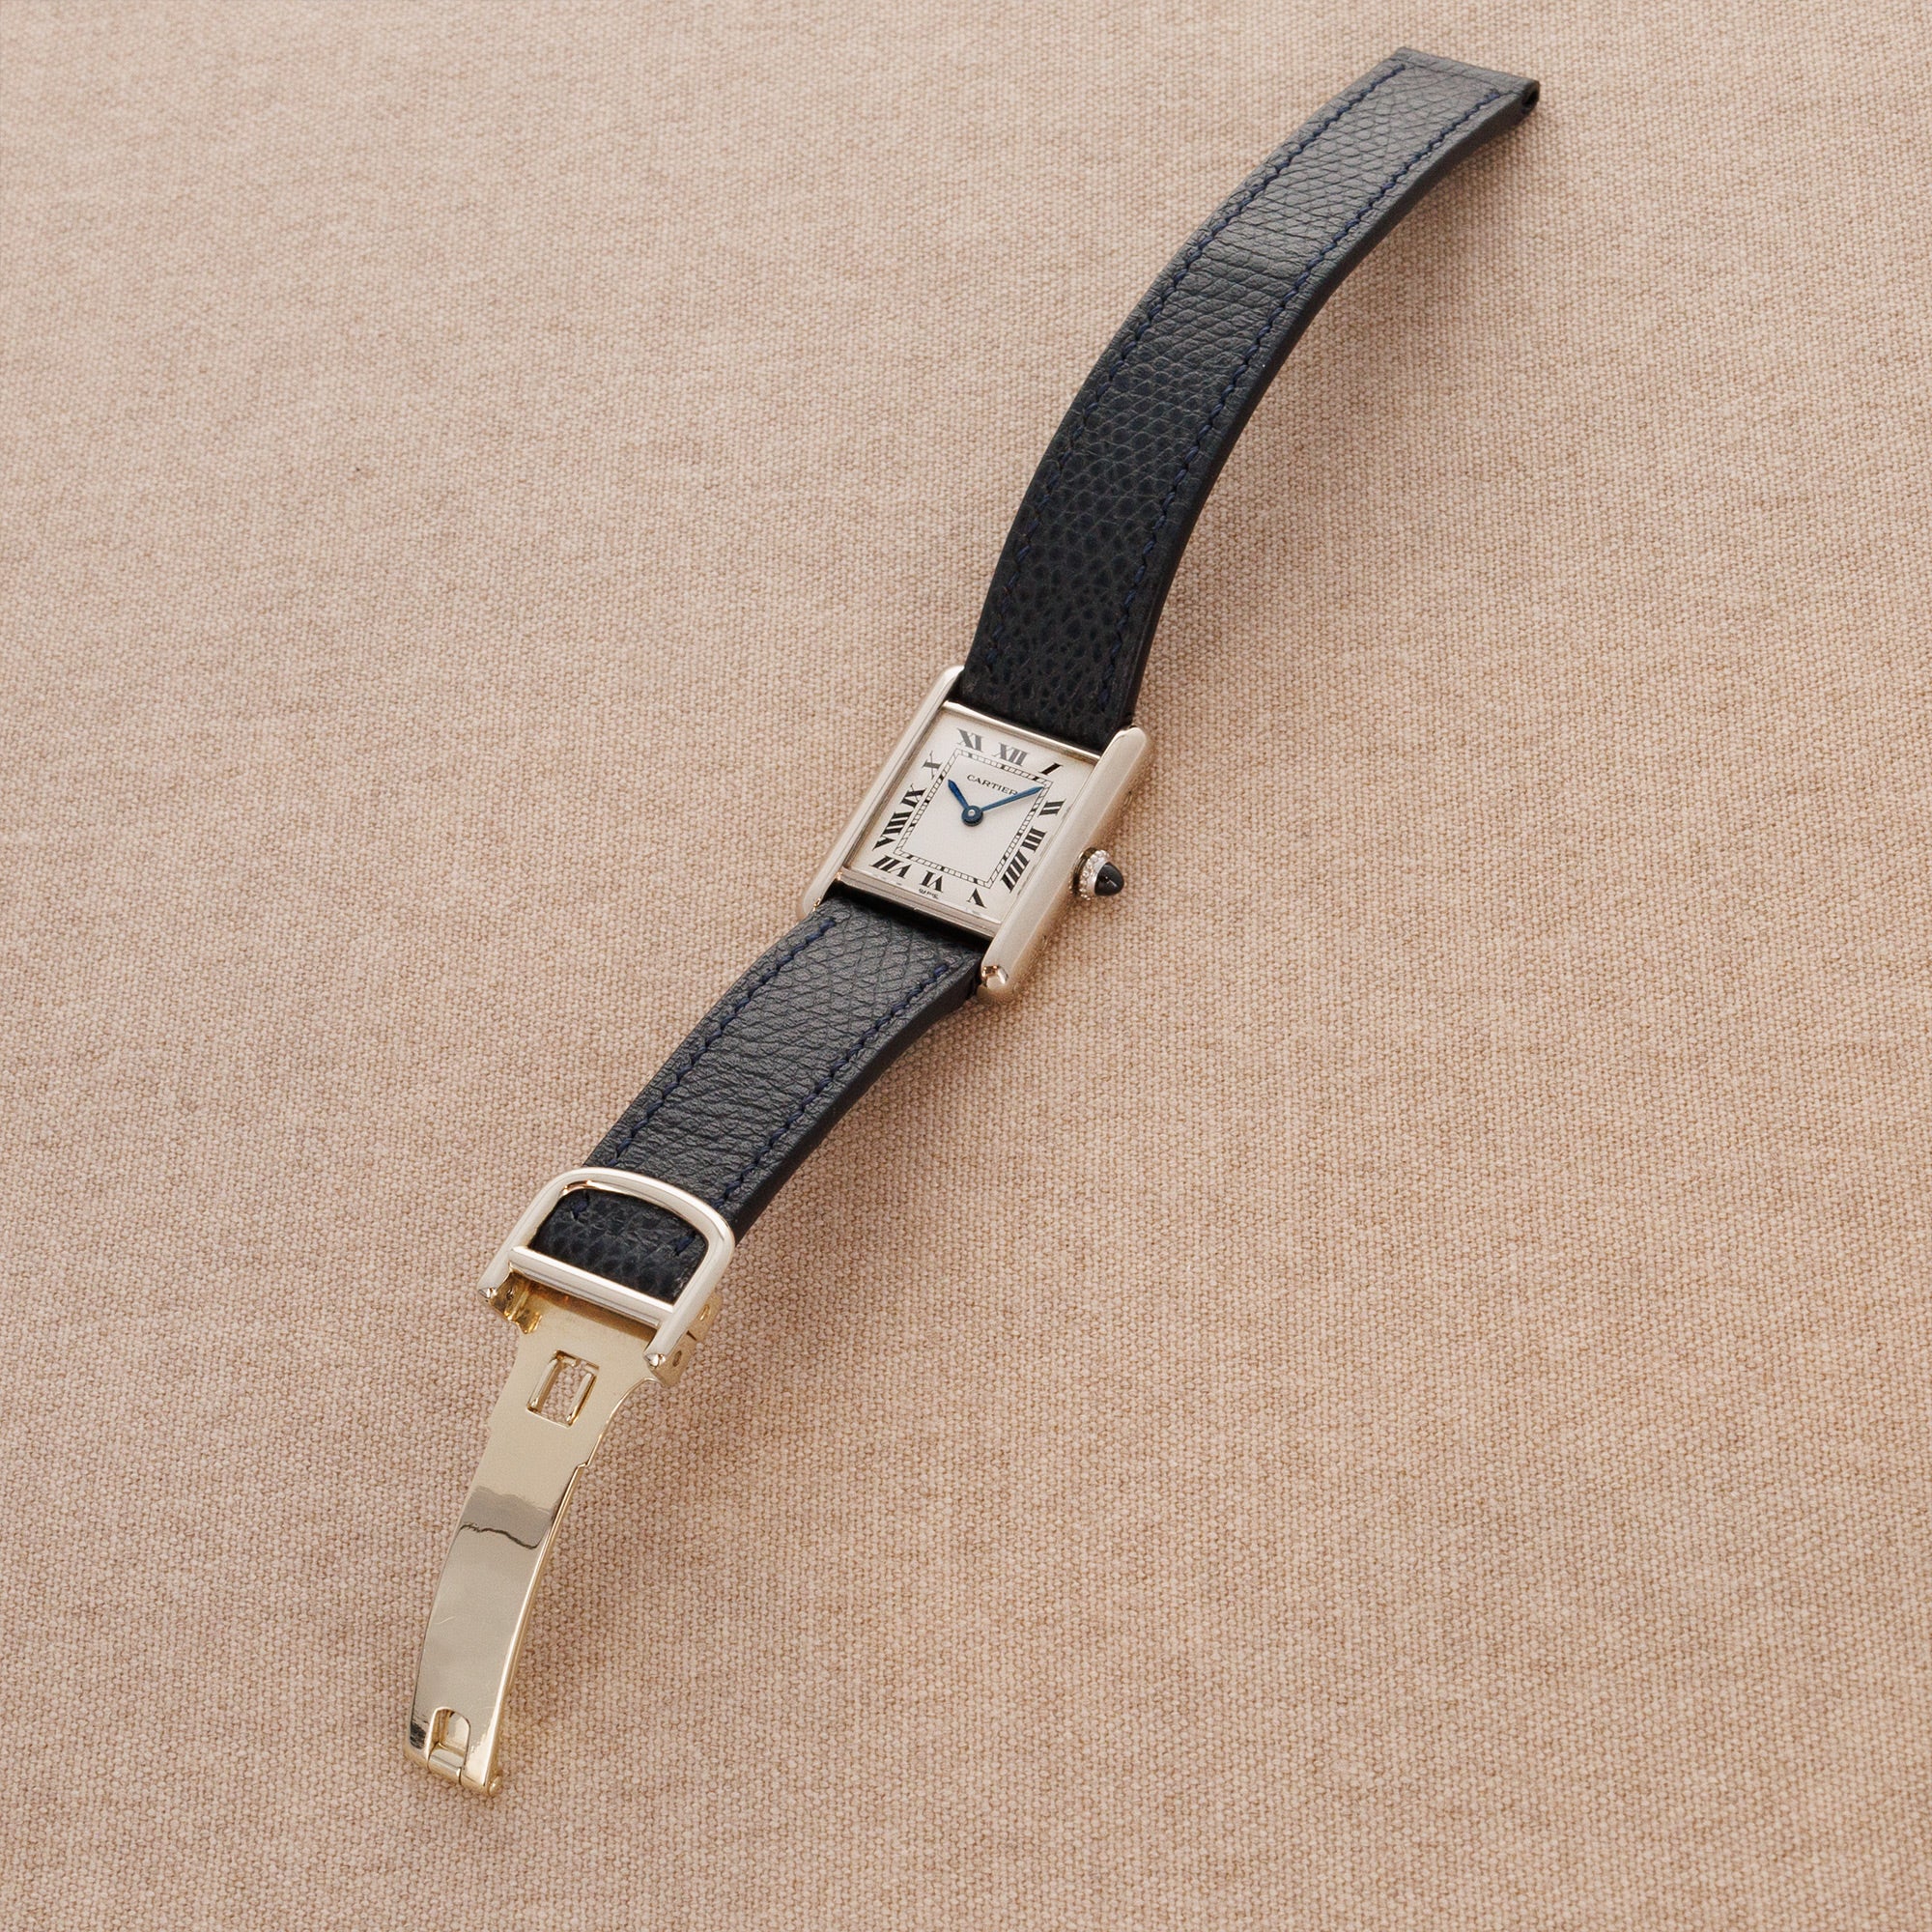 Cartier - Cartier White Gold Tank Watch - The Keystone Watches